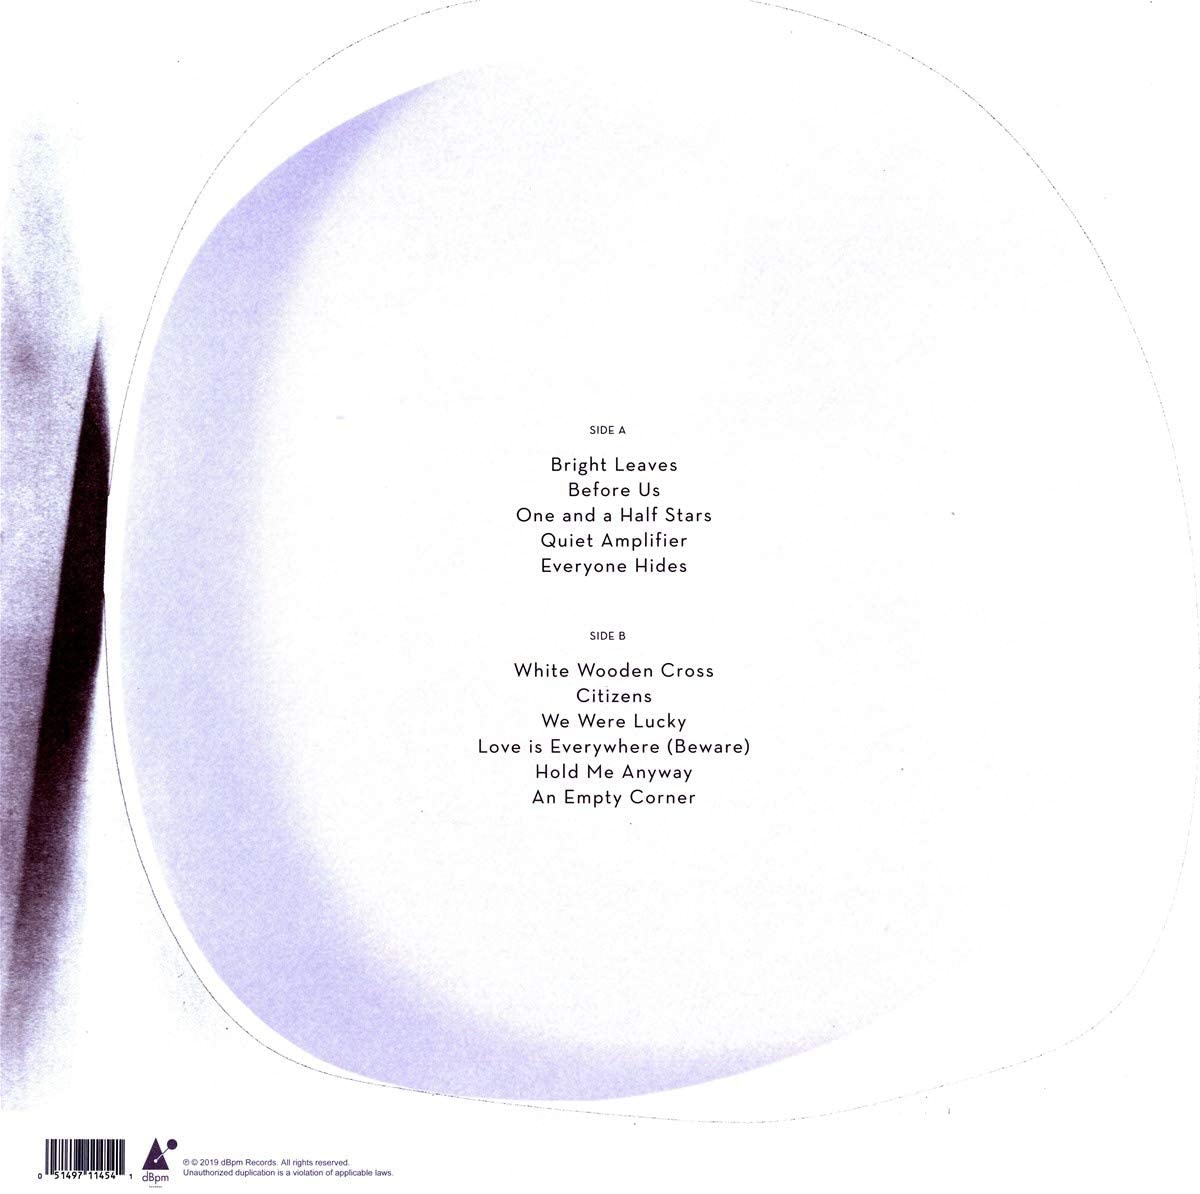 Wilco/Ode to Joy [LP]